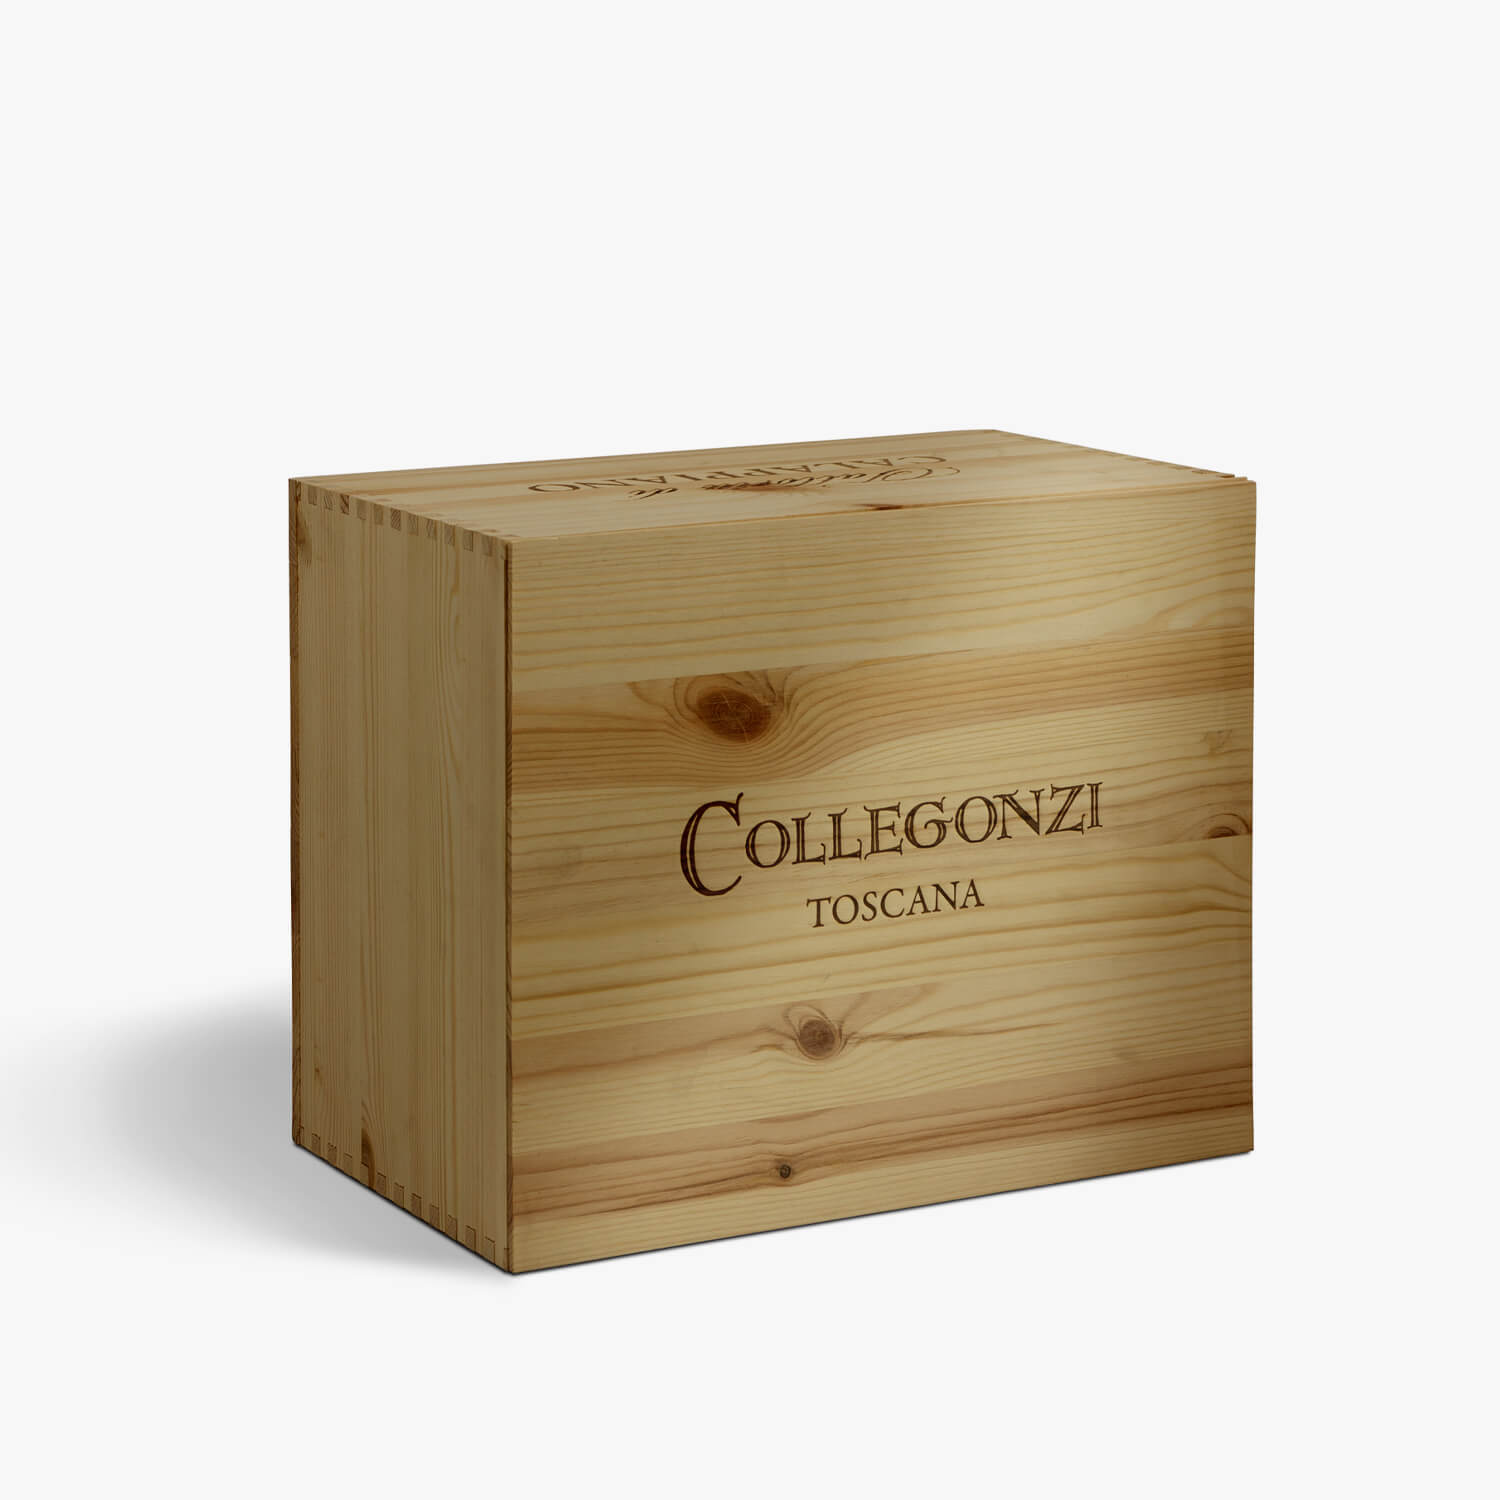 Sensi special pack cassa-legno Collegonzi